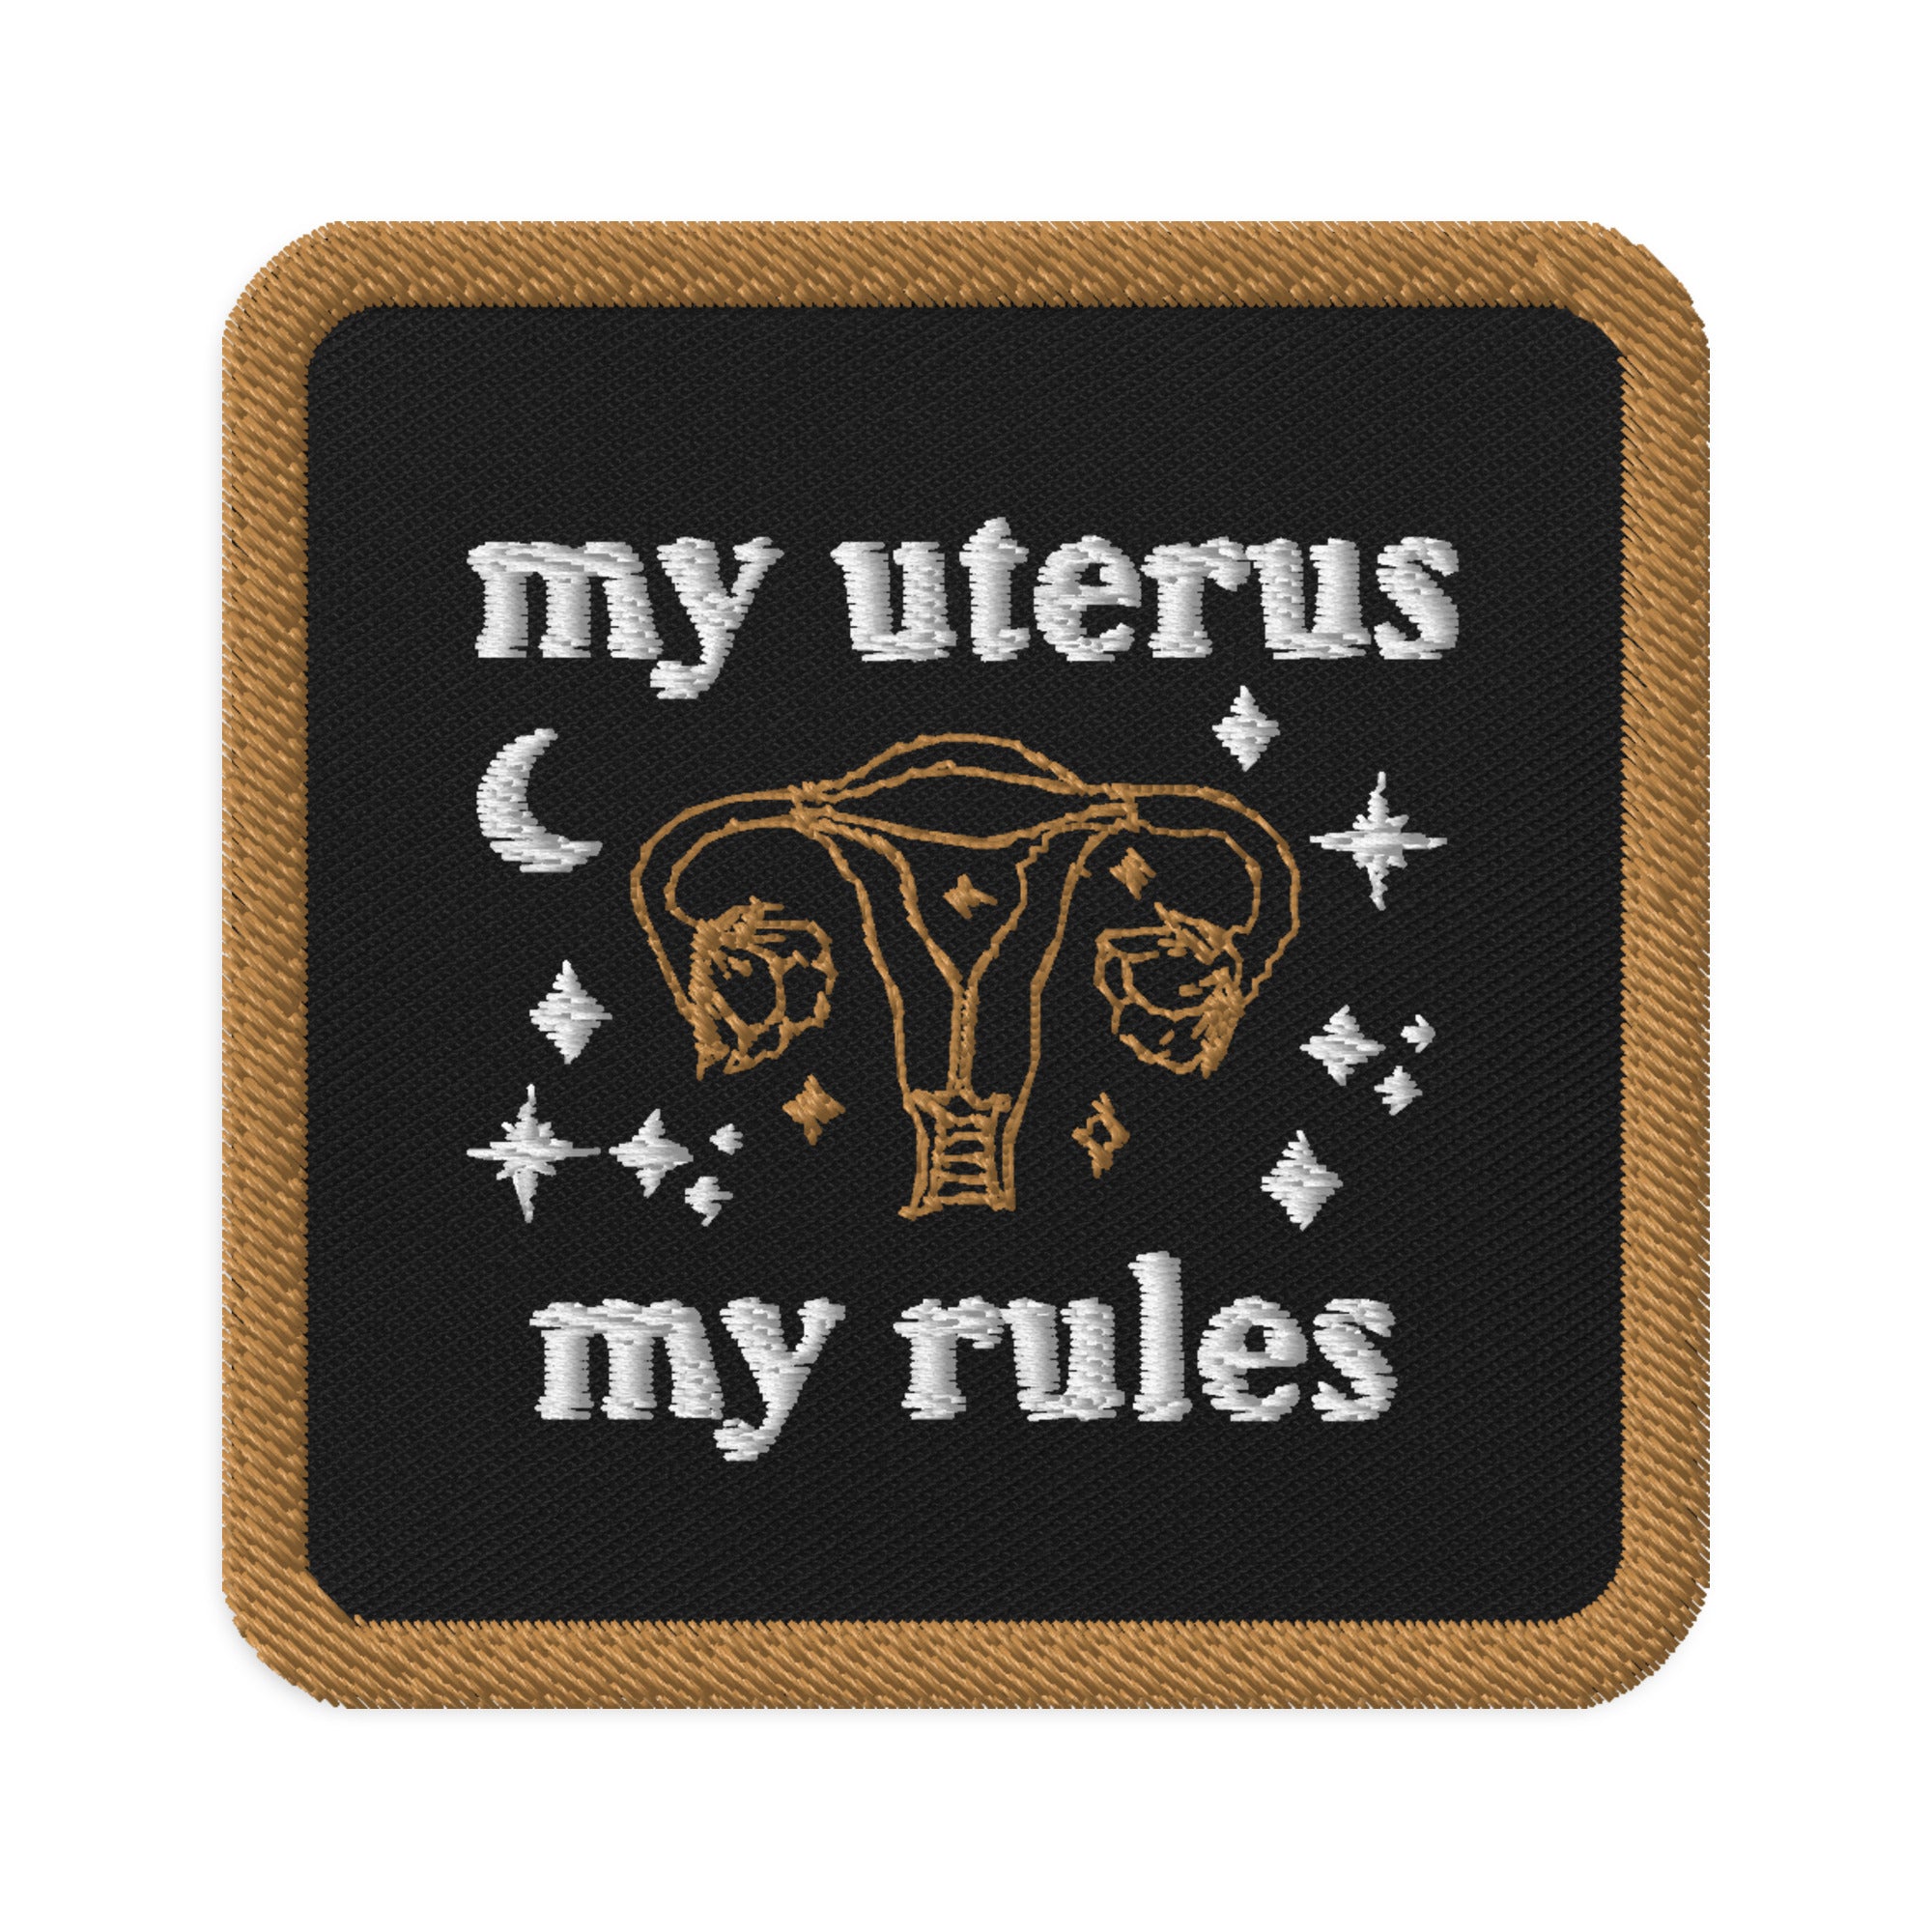 My Uterus, My Rules Patch